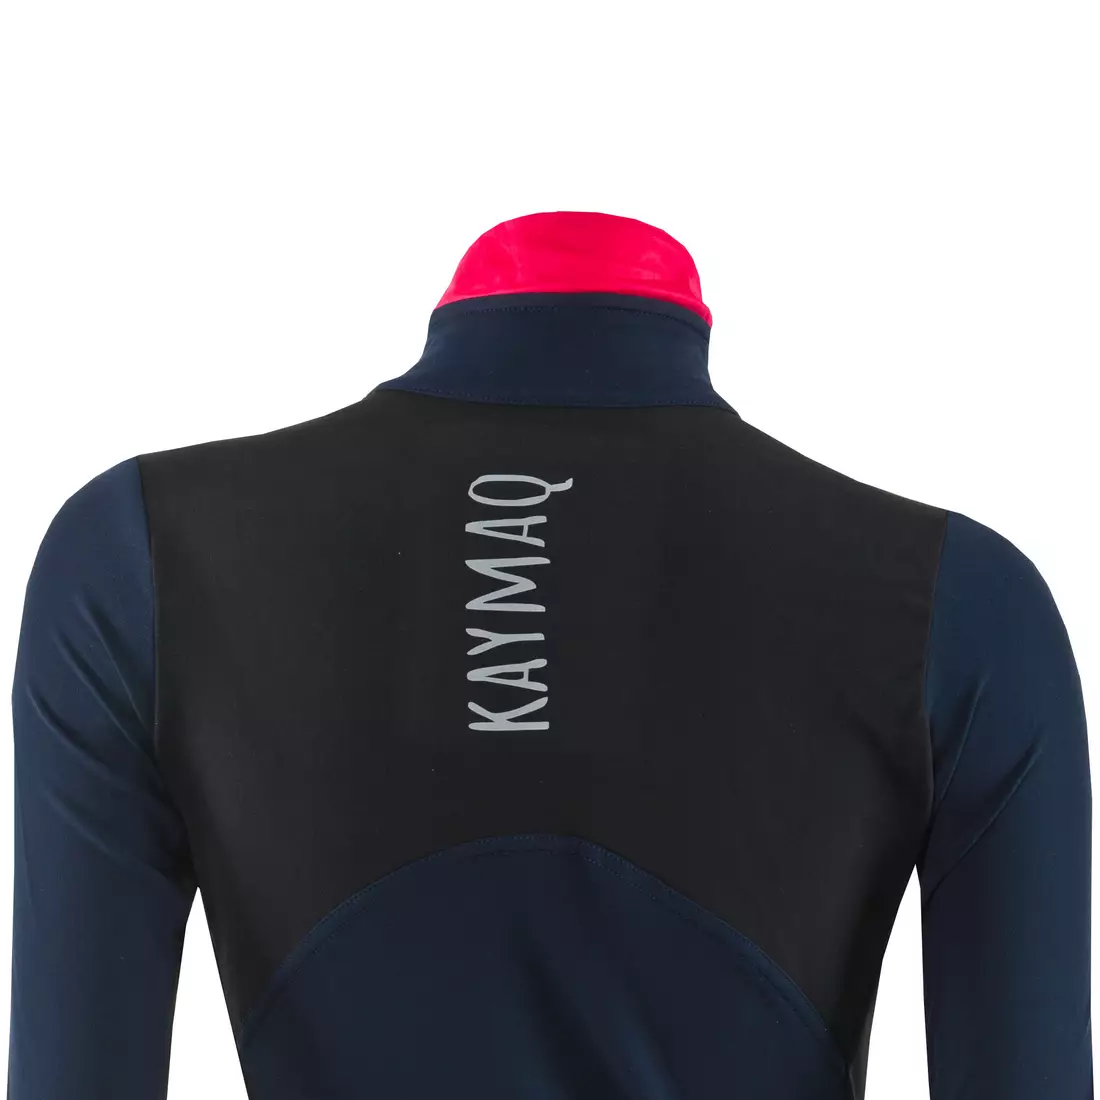 KAYMAQ KYQLSW-100 dámský cyklistický dres modrá-černá